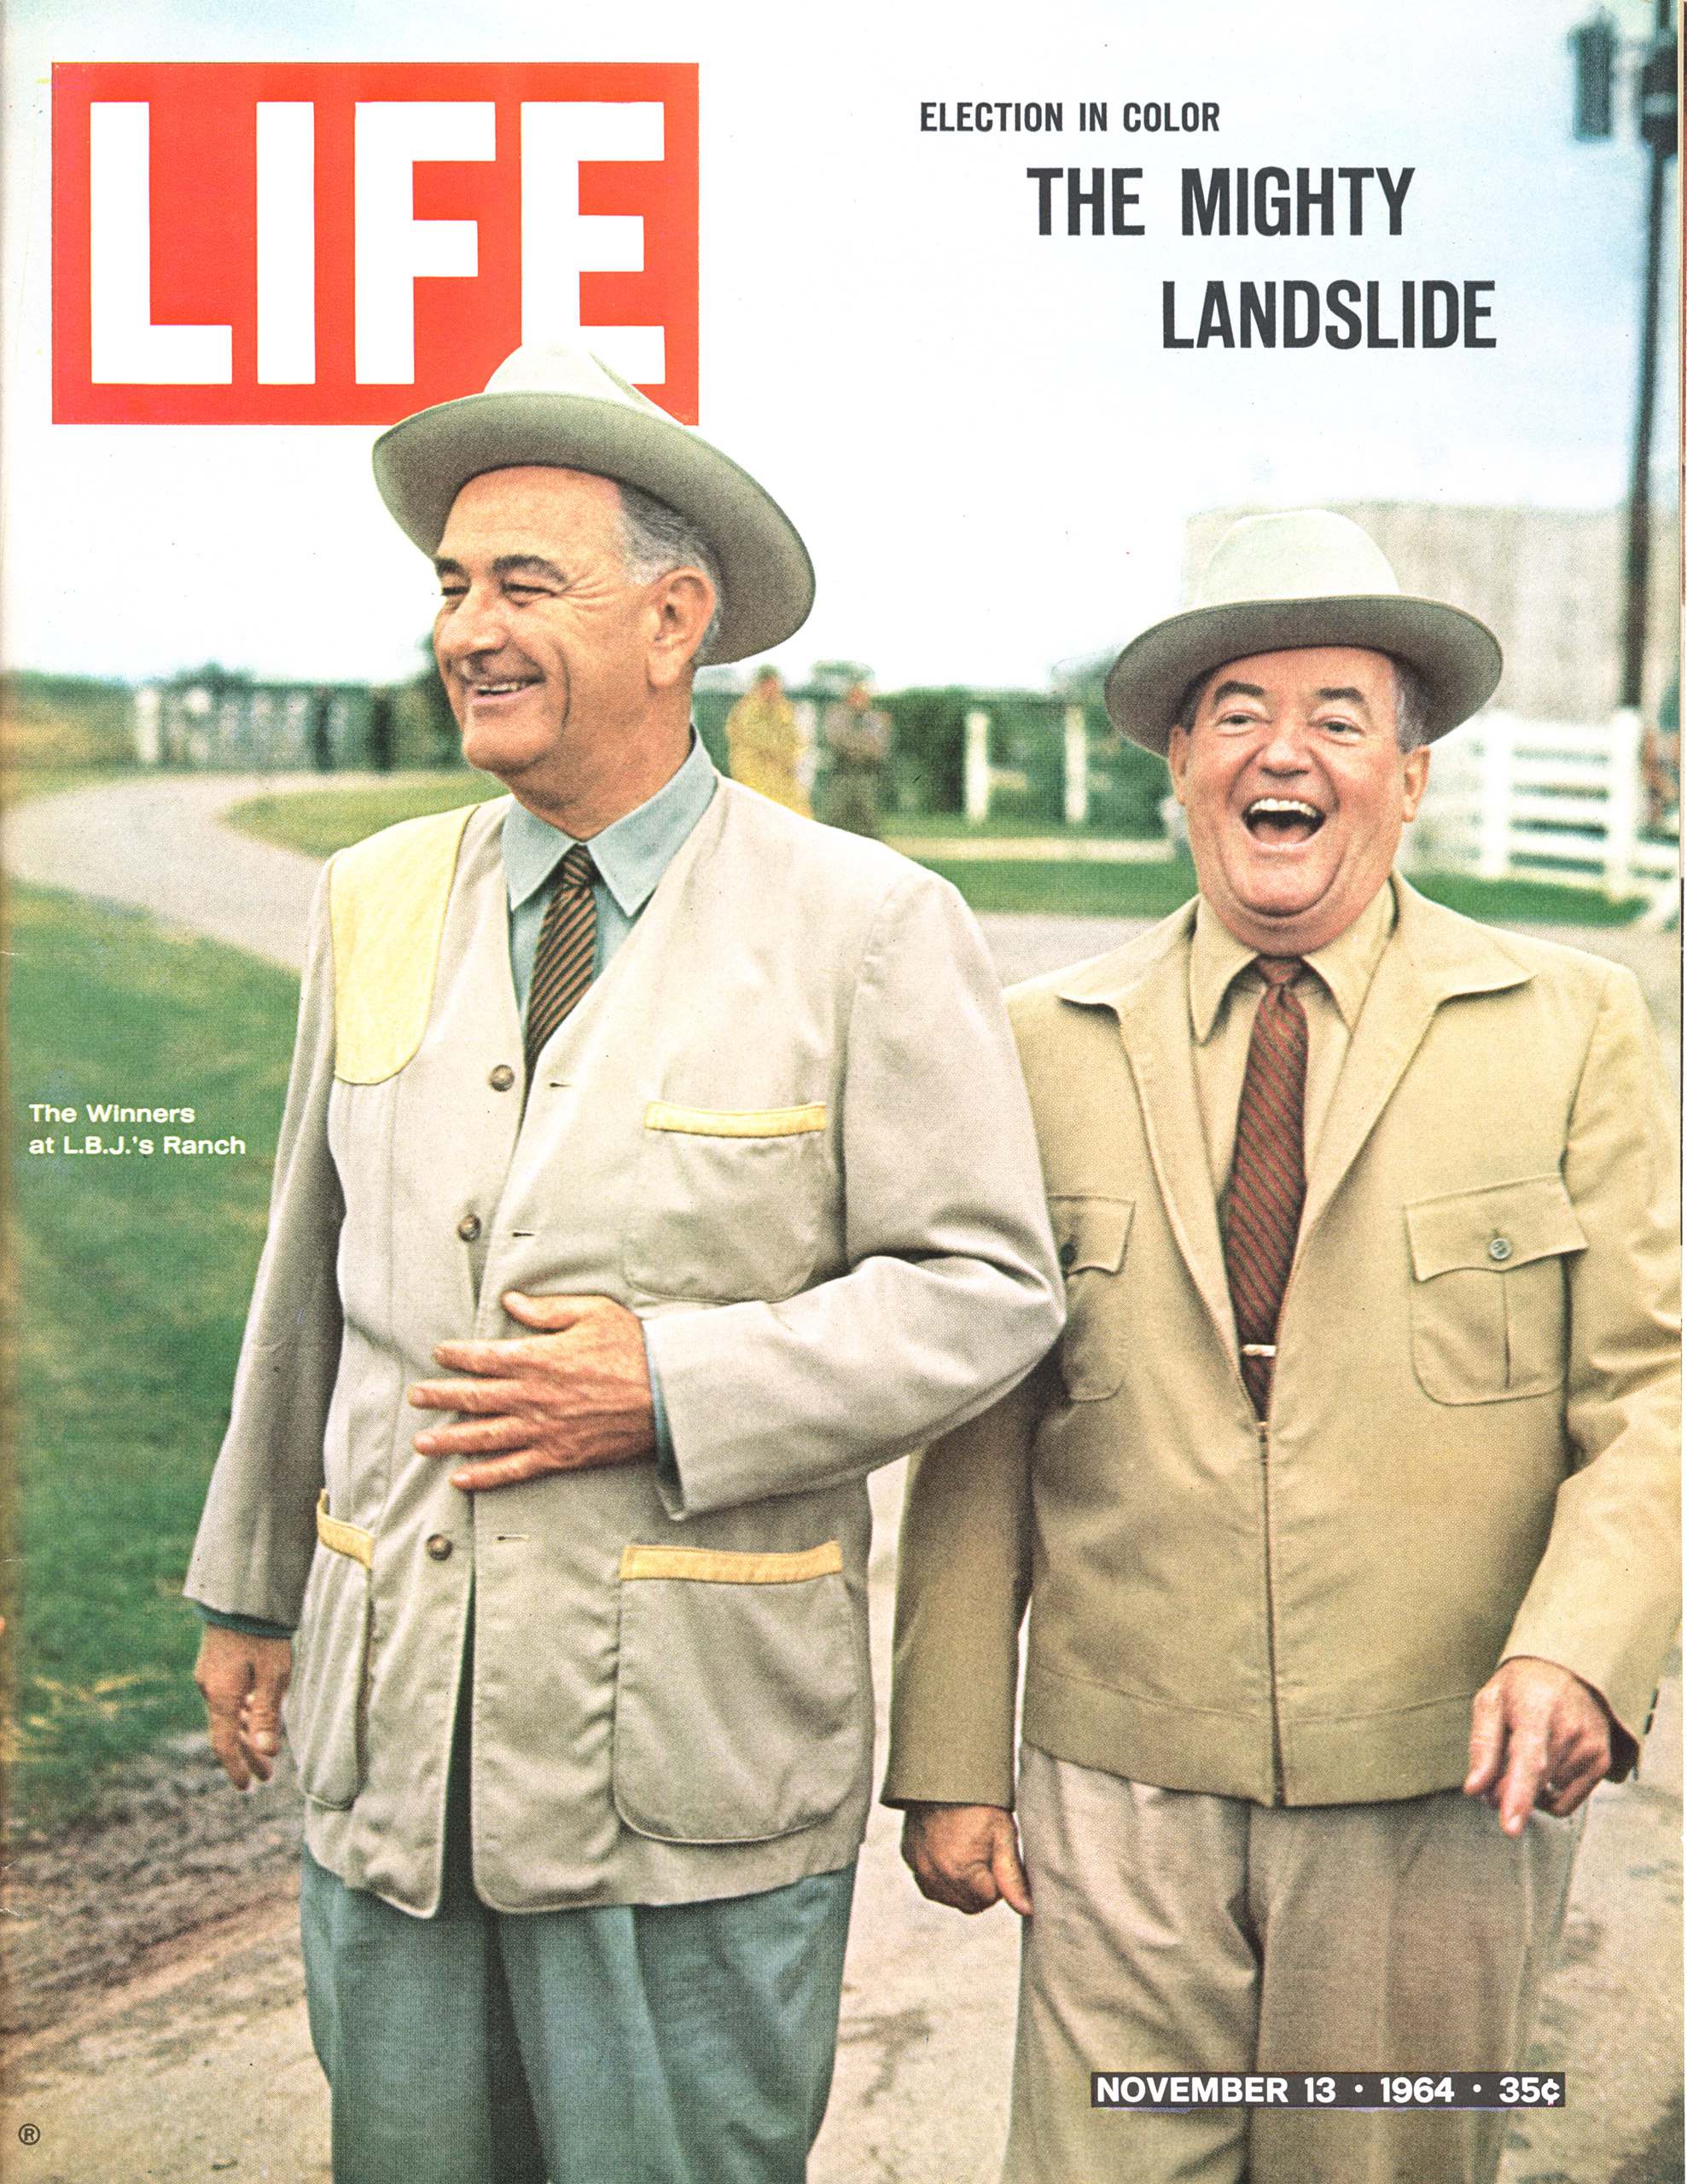 Cover of LIFE magazine, November 13, 1964.